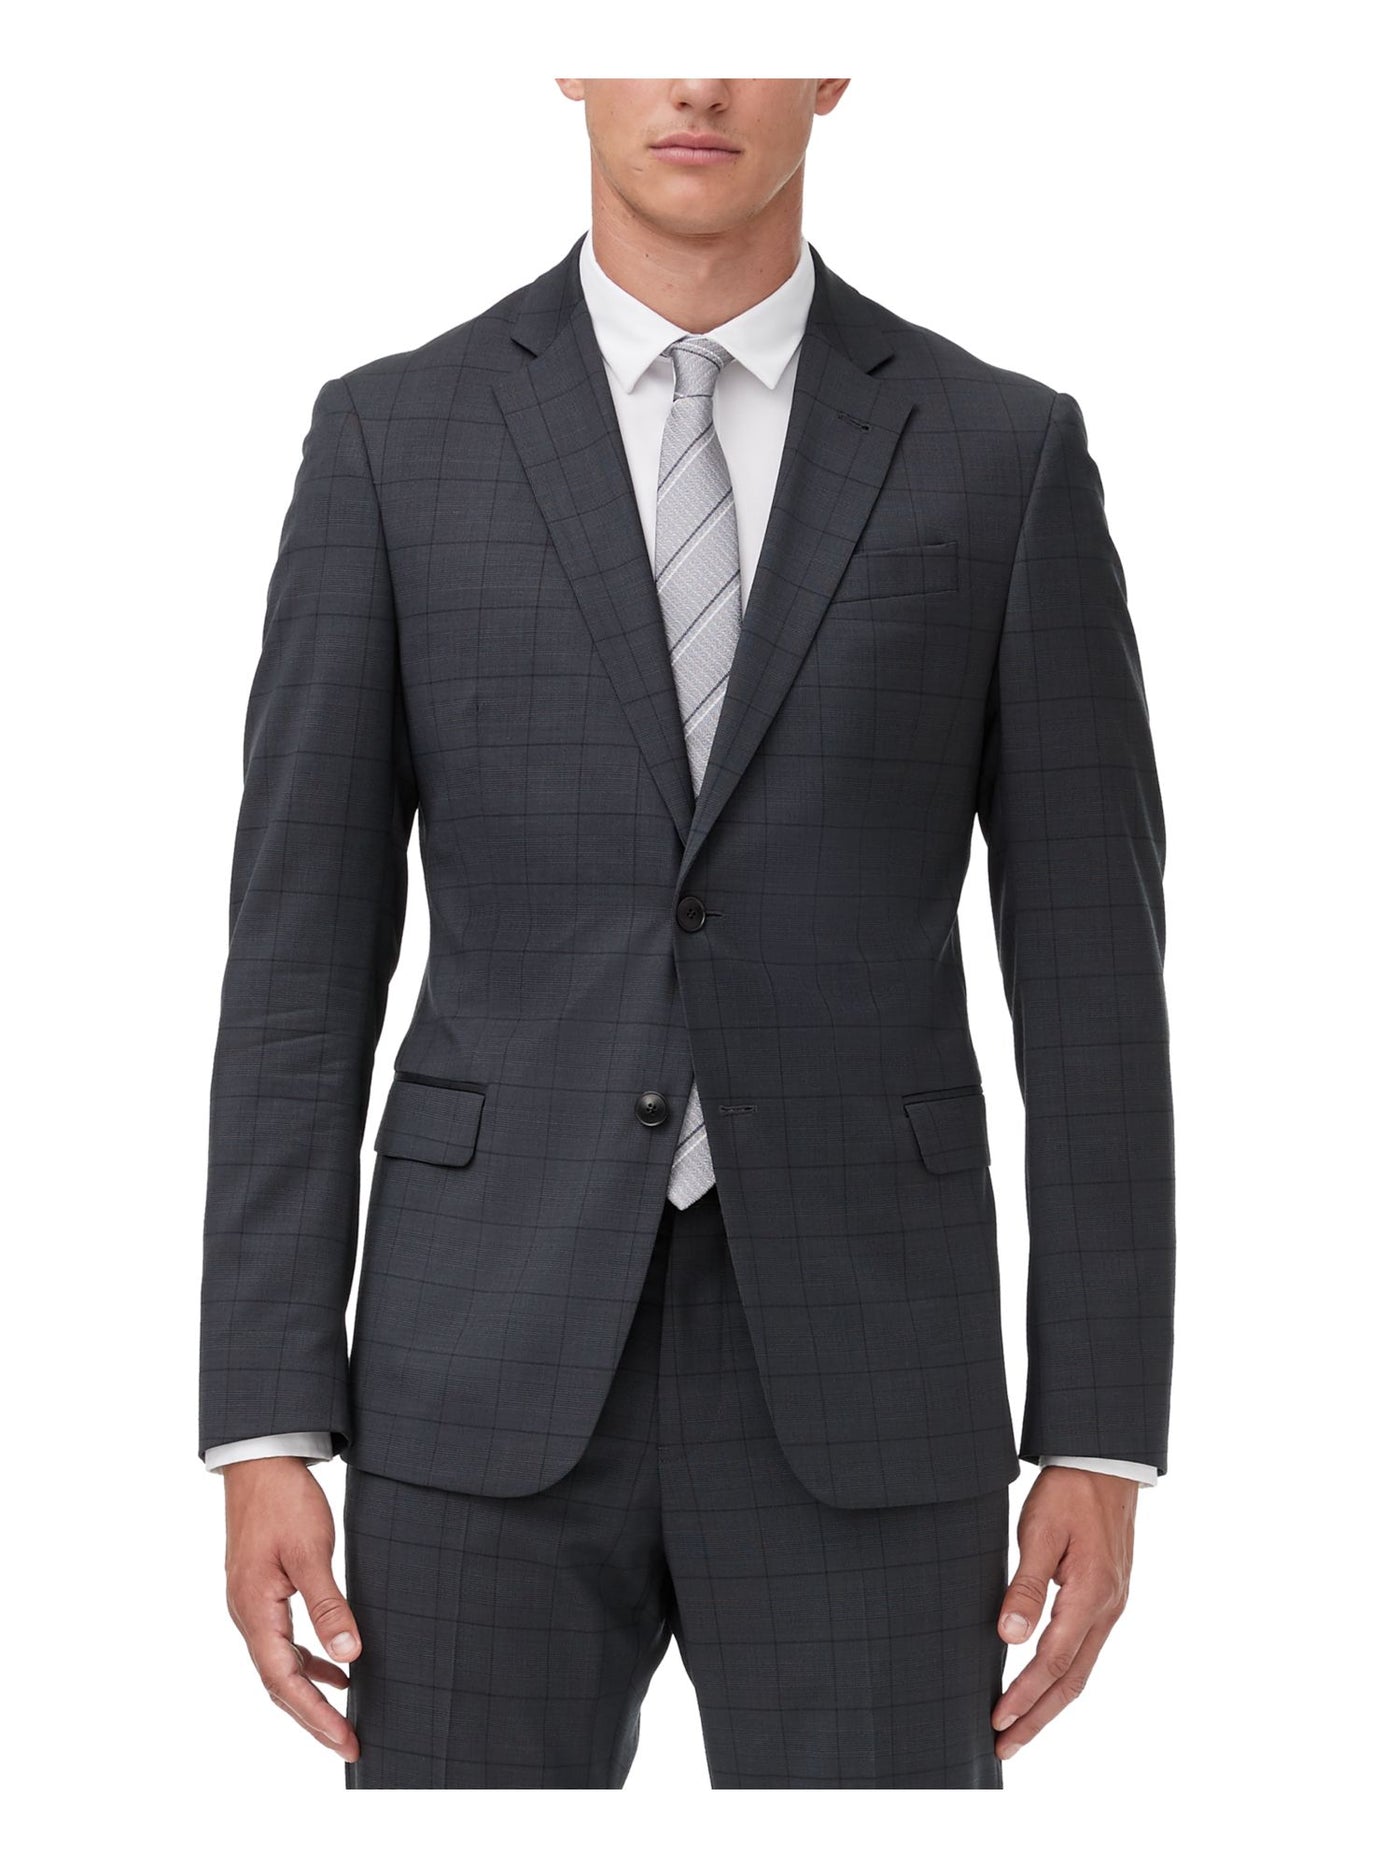 ARMANI EXCHANGE Mens Black Windowpane Plaid Suit Separate Blazer Jacket 44